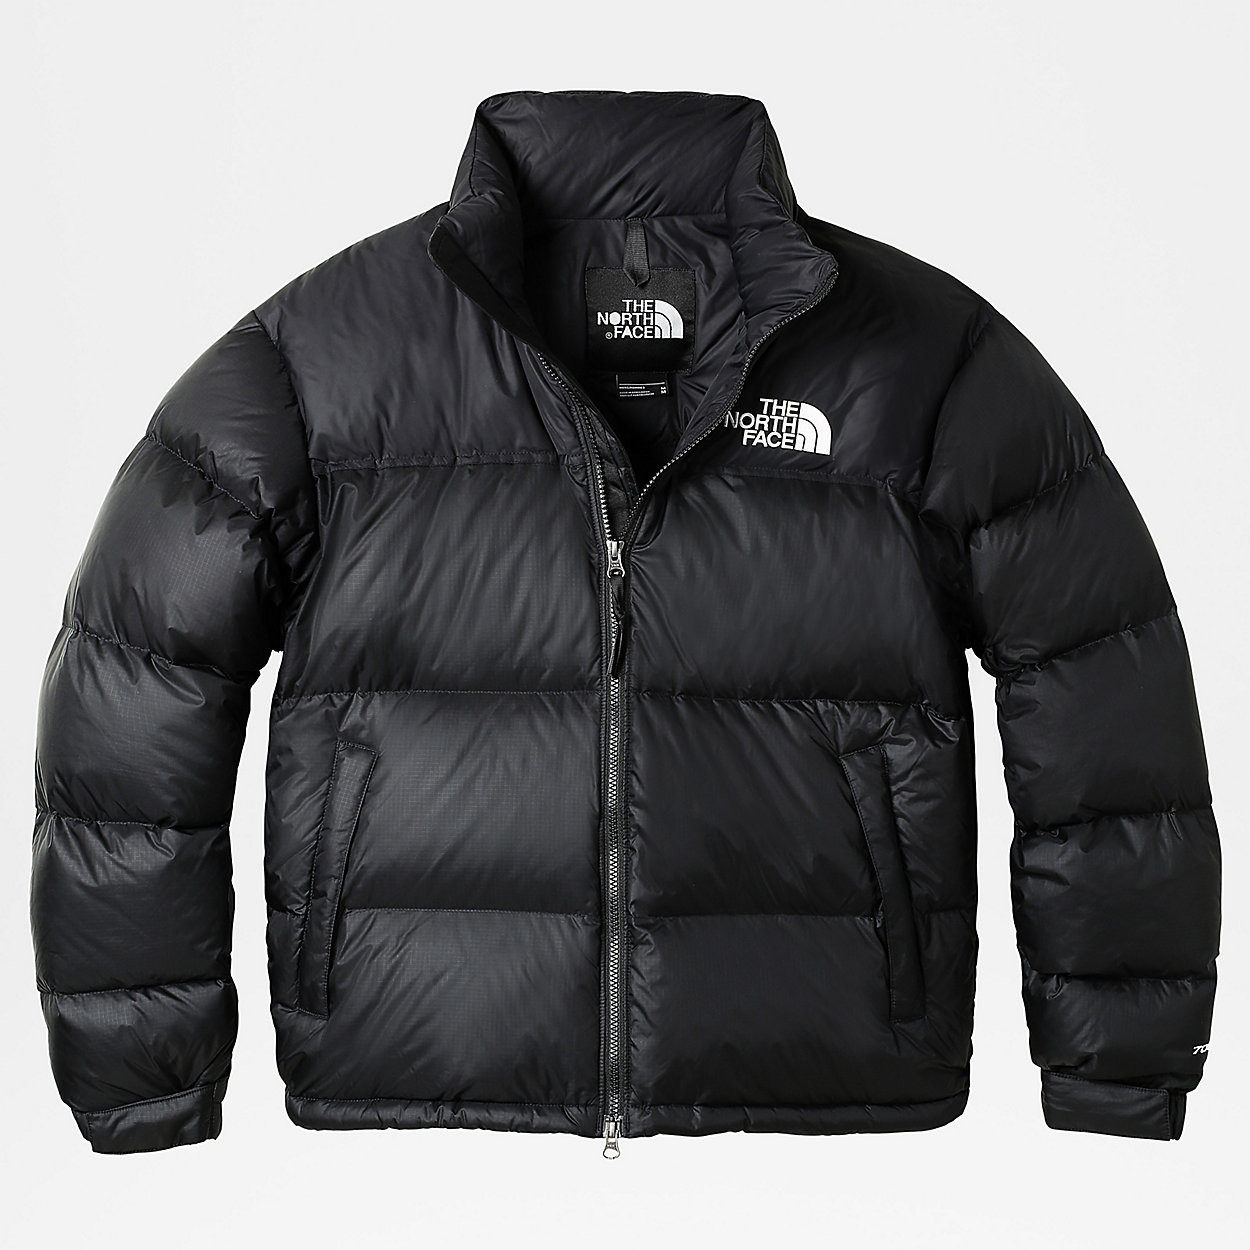 Buy The North Face 1996 Retro Nuptse Jacket tnf black from Â£224.00 (Today) â Best Deals on 